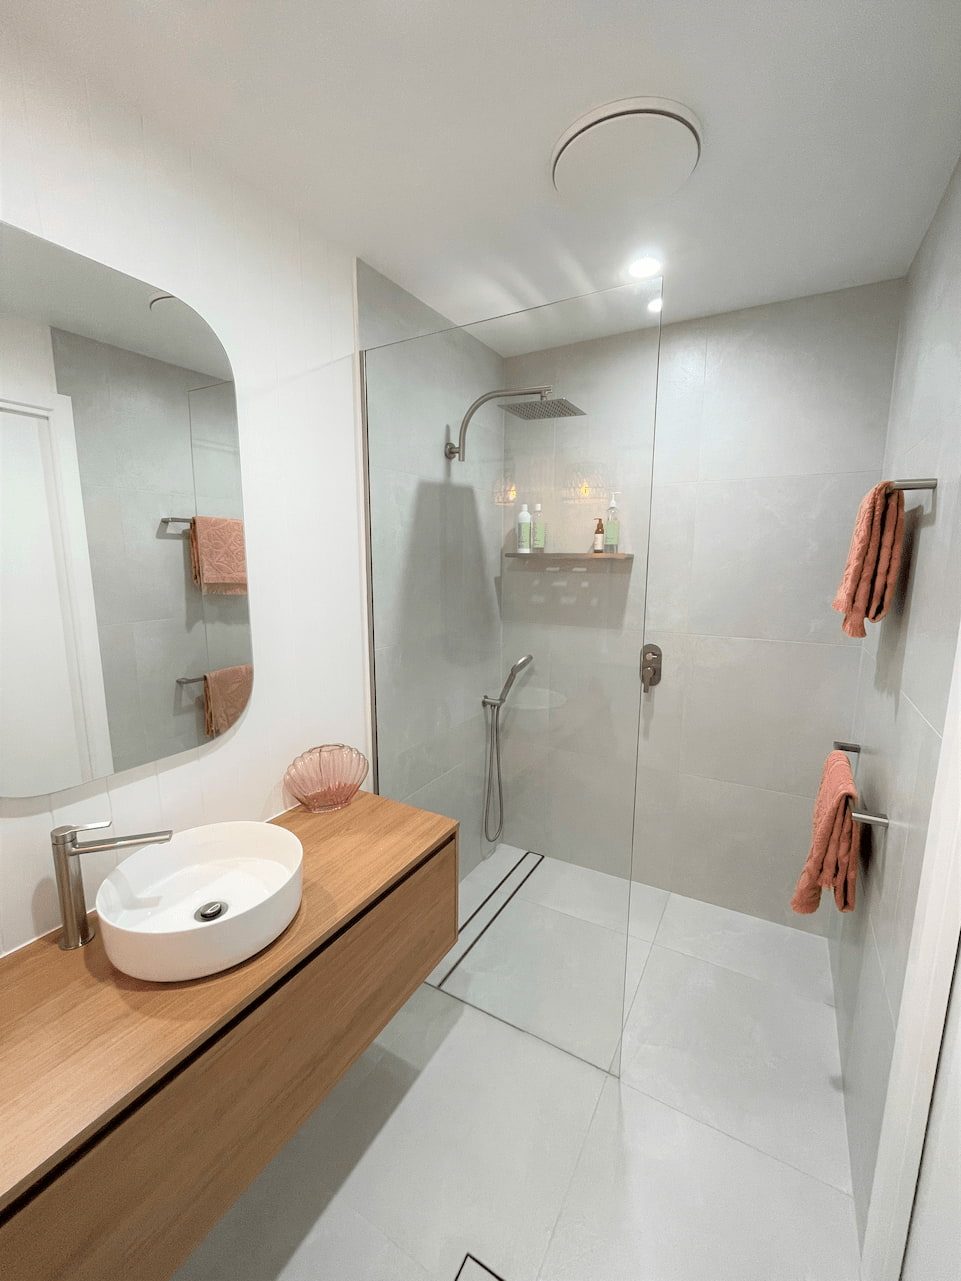 Bathroom Renovation — Home Builders in Burleigh, QLDBathroom Renovation — Home Builders in Burleigh, QLD